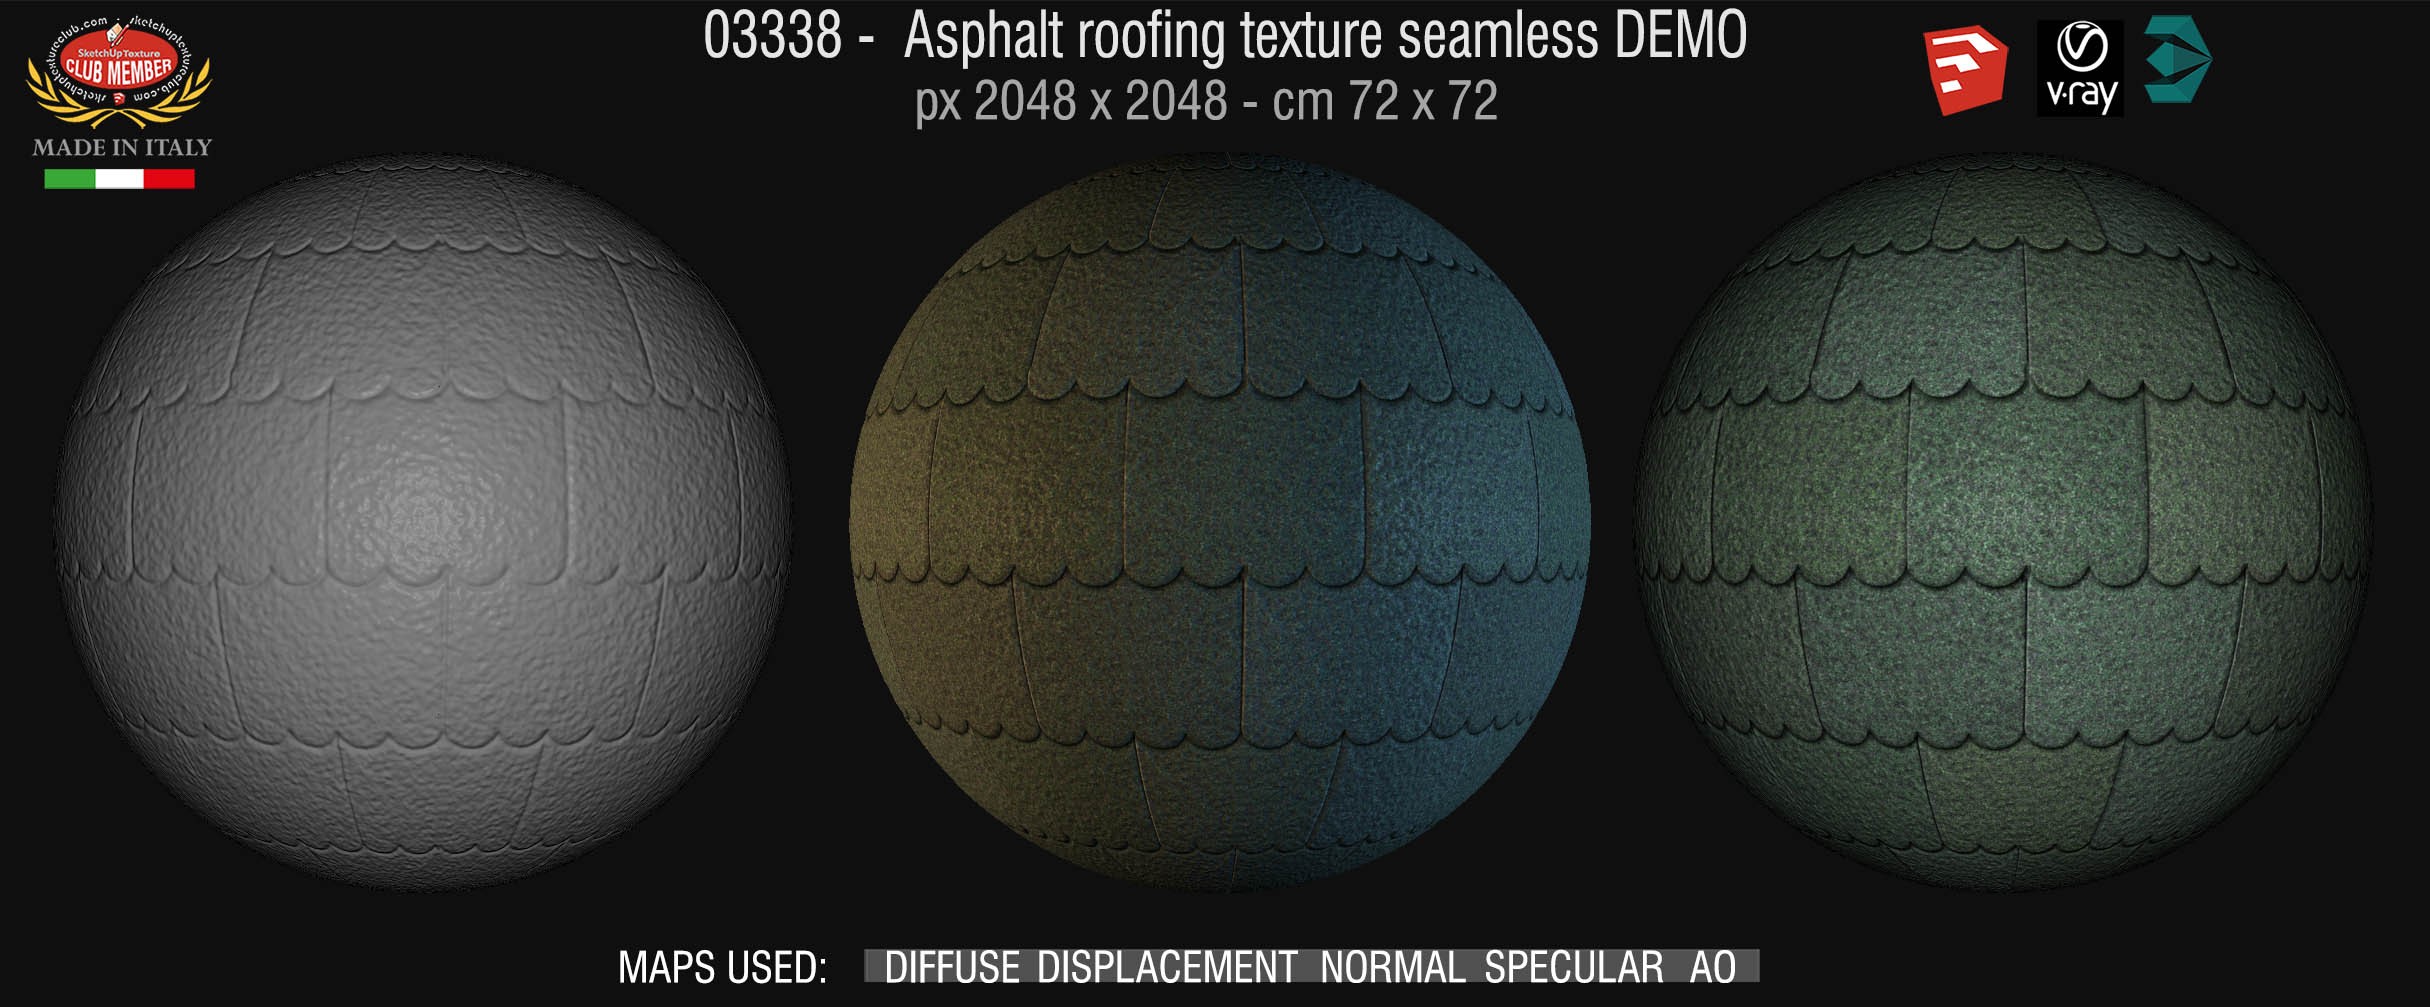 03338 Asphalt roofing texture seamless + maps DEMO